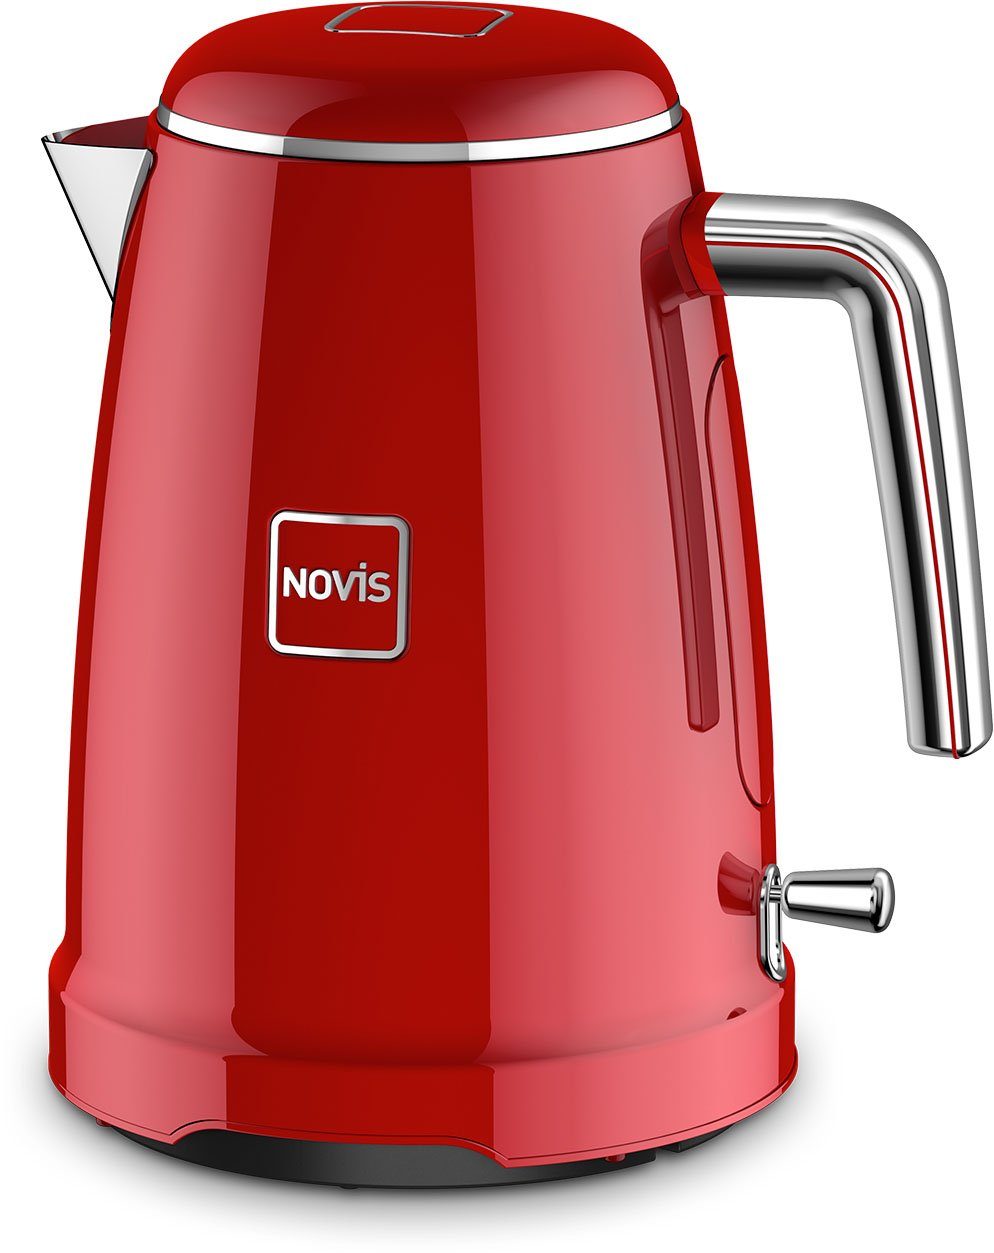 NOVIS Wasserkocher K1 rot, 1,6 l, 2400 W, Metallgehäuse